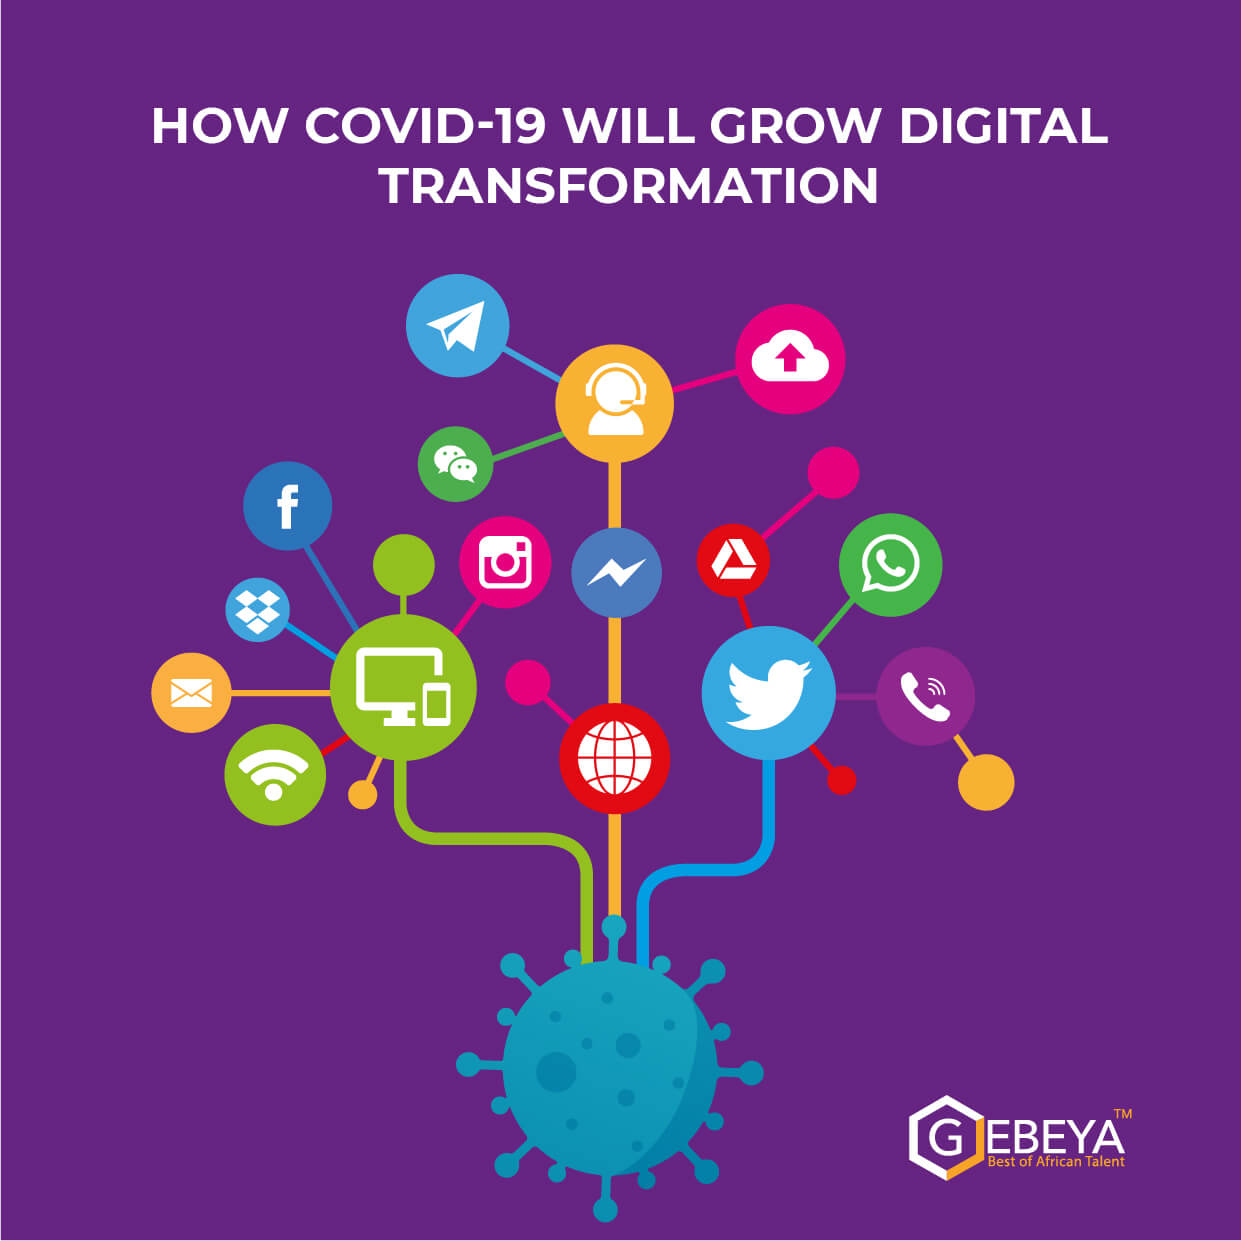 Coronavirus Connected Us: 7 Ways COVID-19 Will Accelerate Digital Transformation